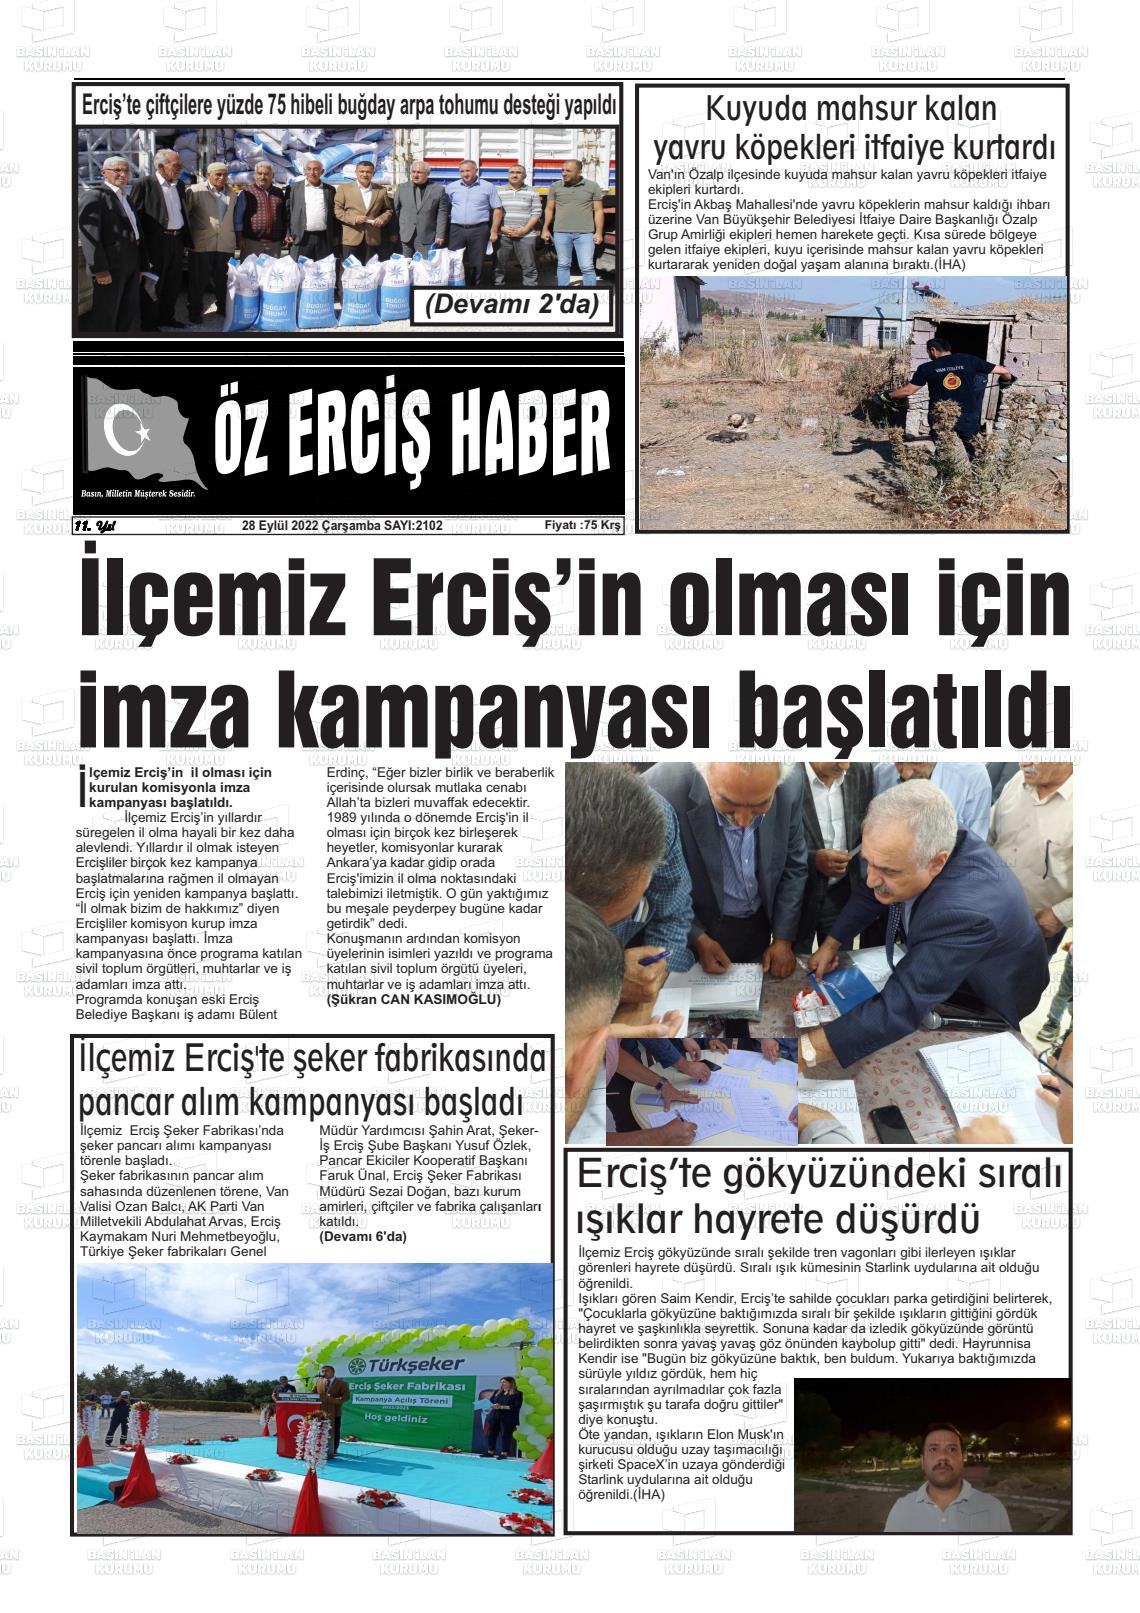 28 Eylül 2022 Öz Erciş Haber Gazete Manşeti